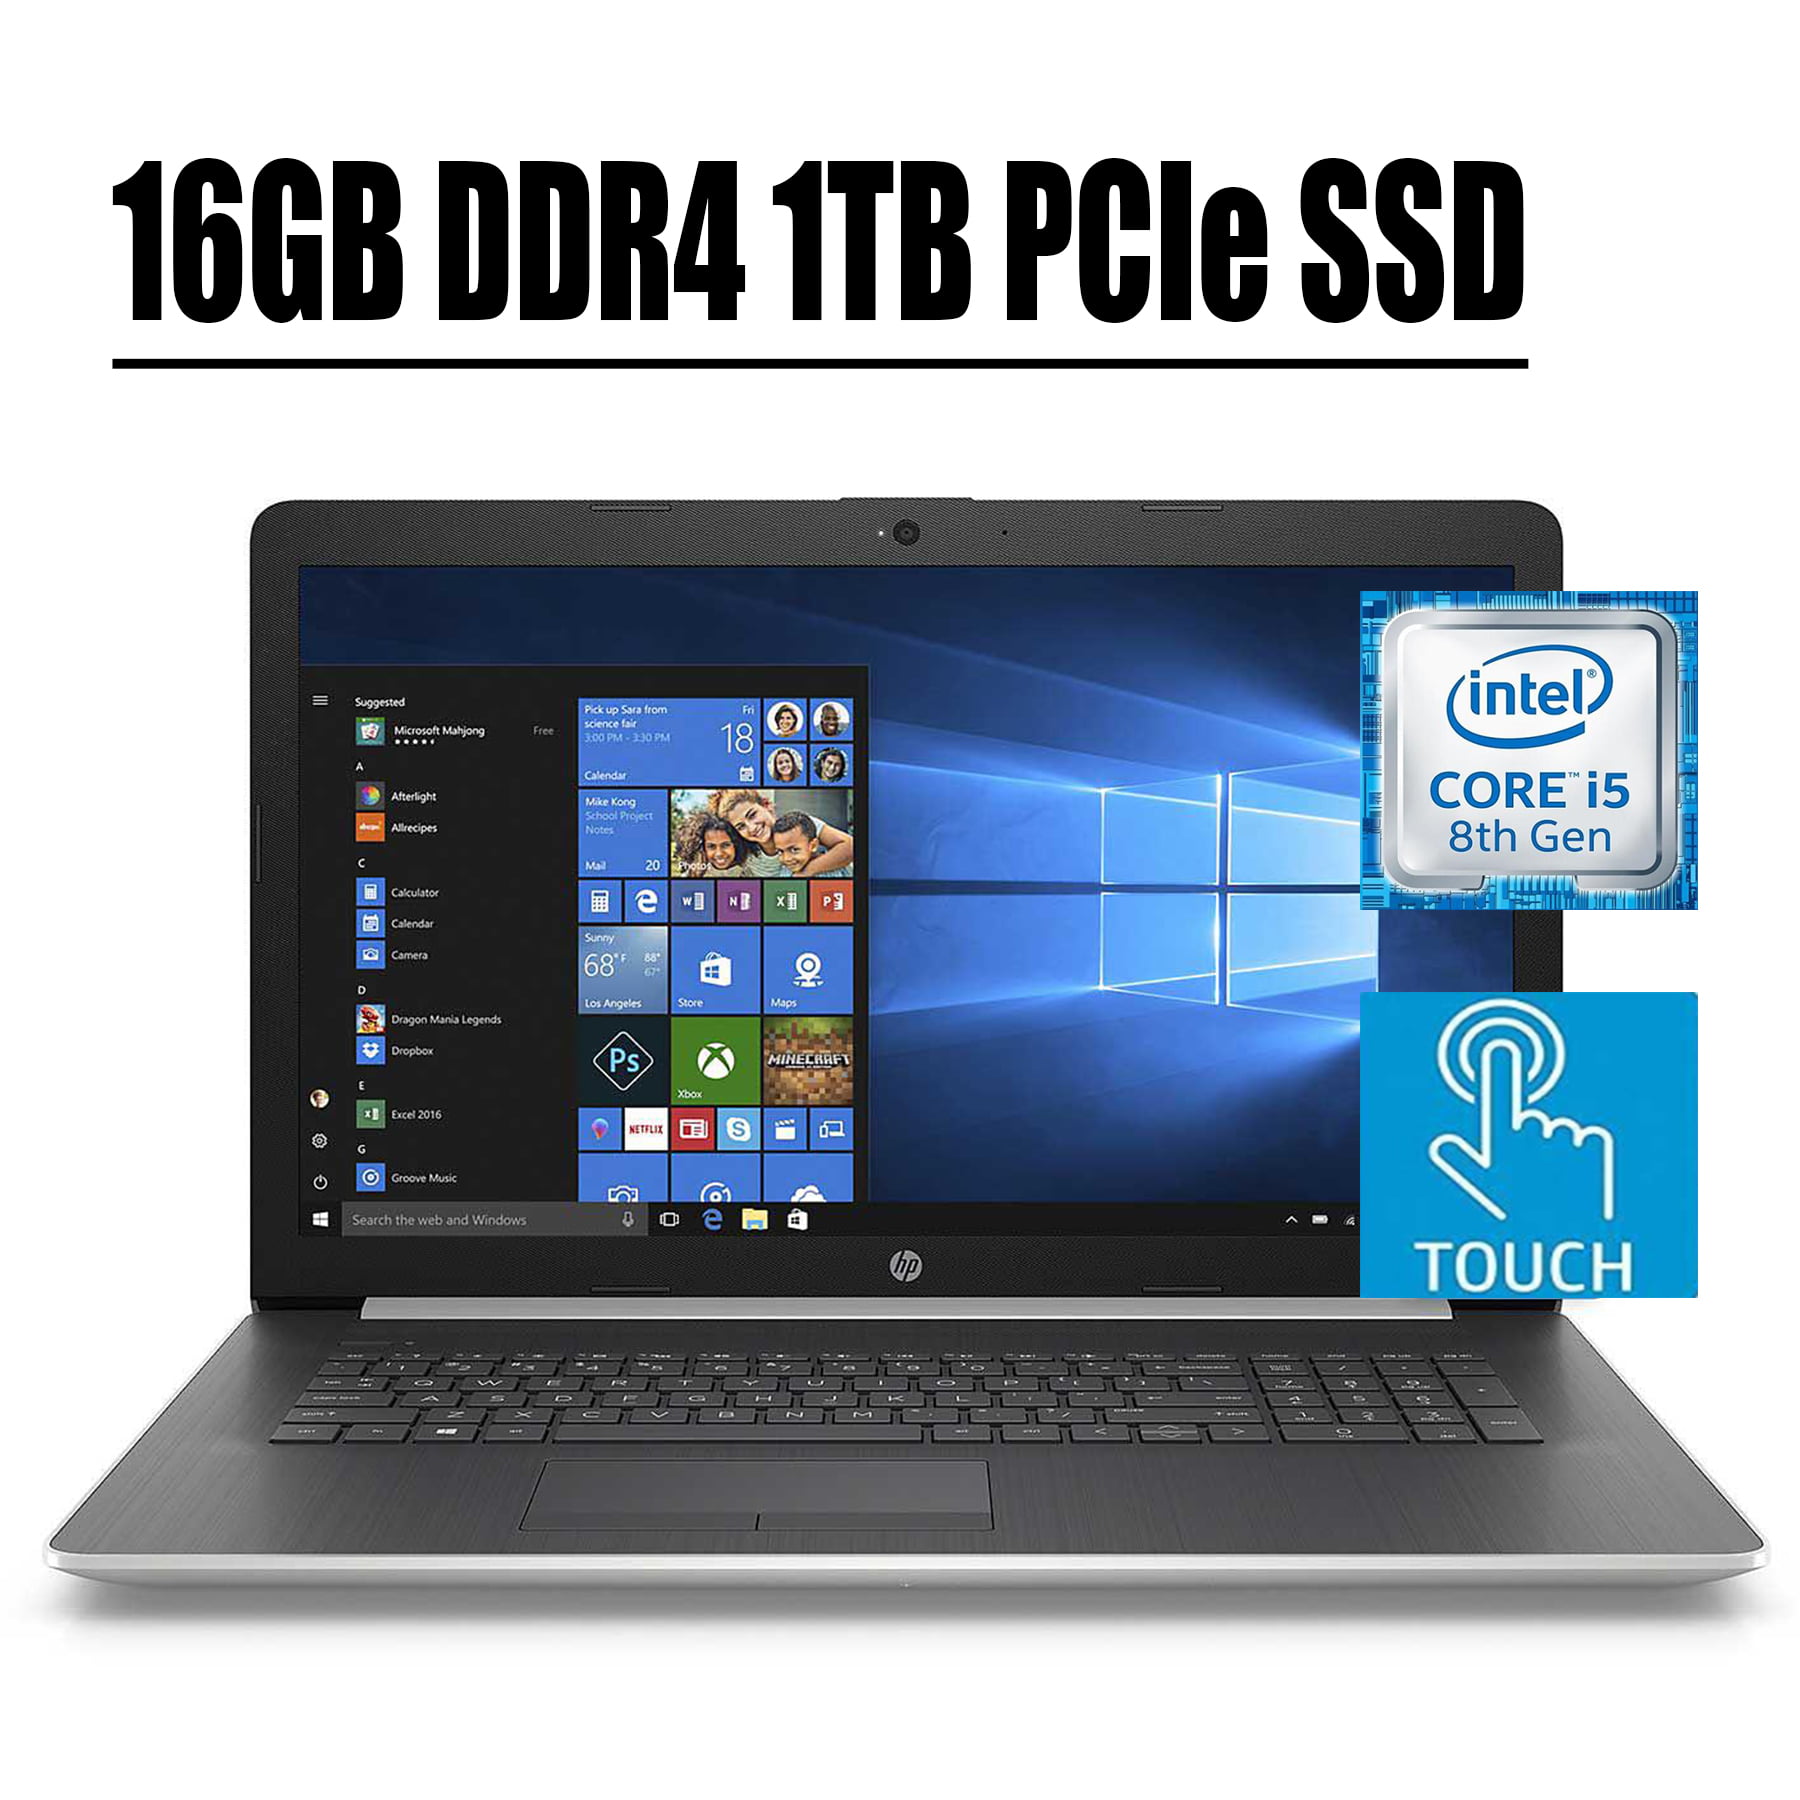 avaro silencio Marquesina 2020 Flagship HP 17 Newest Laptop Computer I 17.3 inch HD+  Touchscreen&nbsp;Display I 8th Gen Intel Quad-Core i5-8265U up to 3.9GHz I  16GB DDR4 1TB PCIe SSD I DVD HDMI USB WIFI